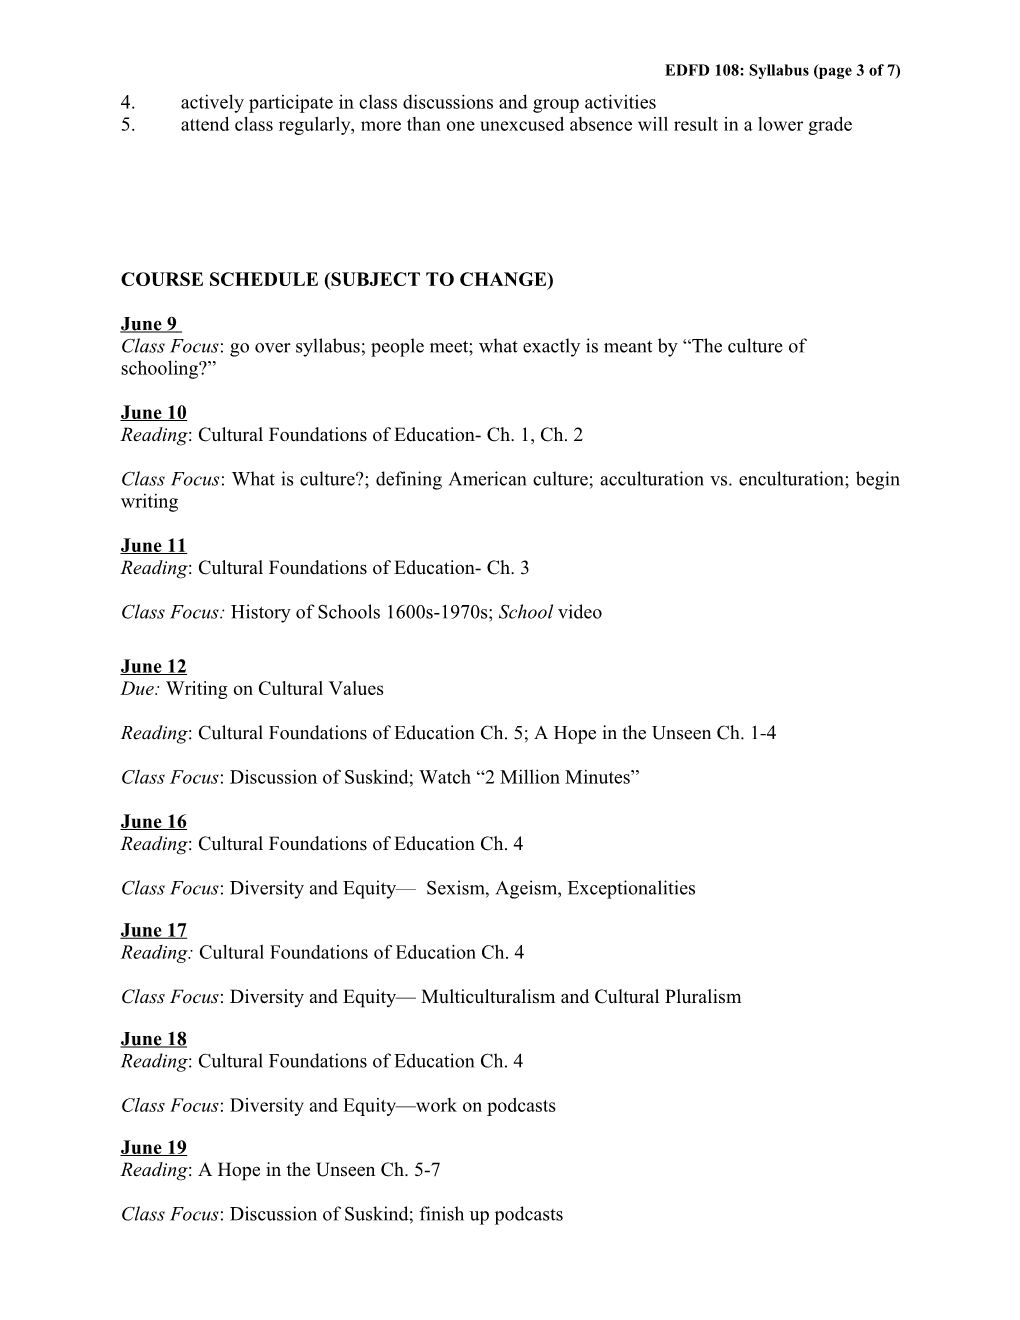 EDFD 108: Syllabus (Page 1 of 7)